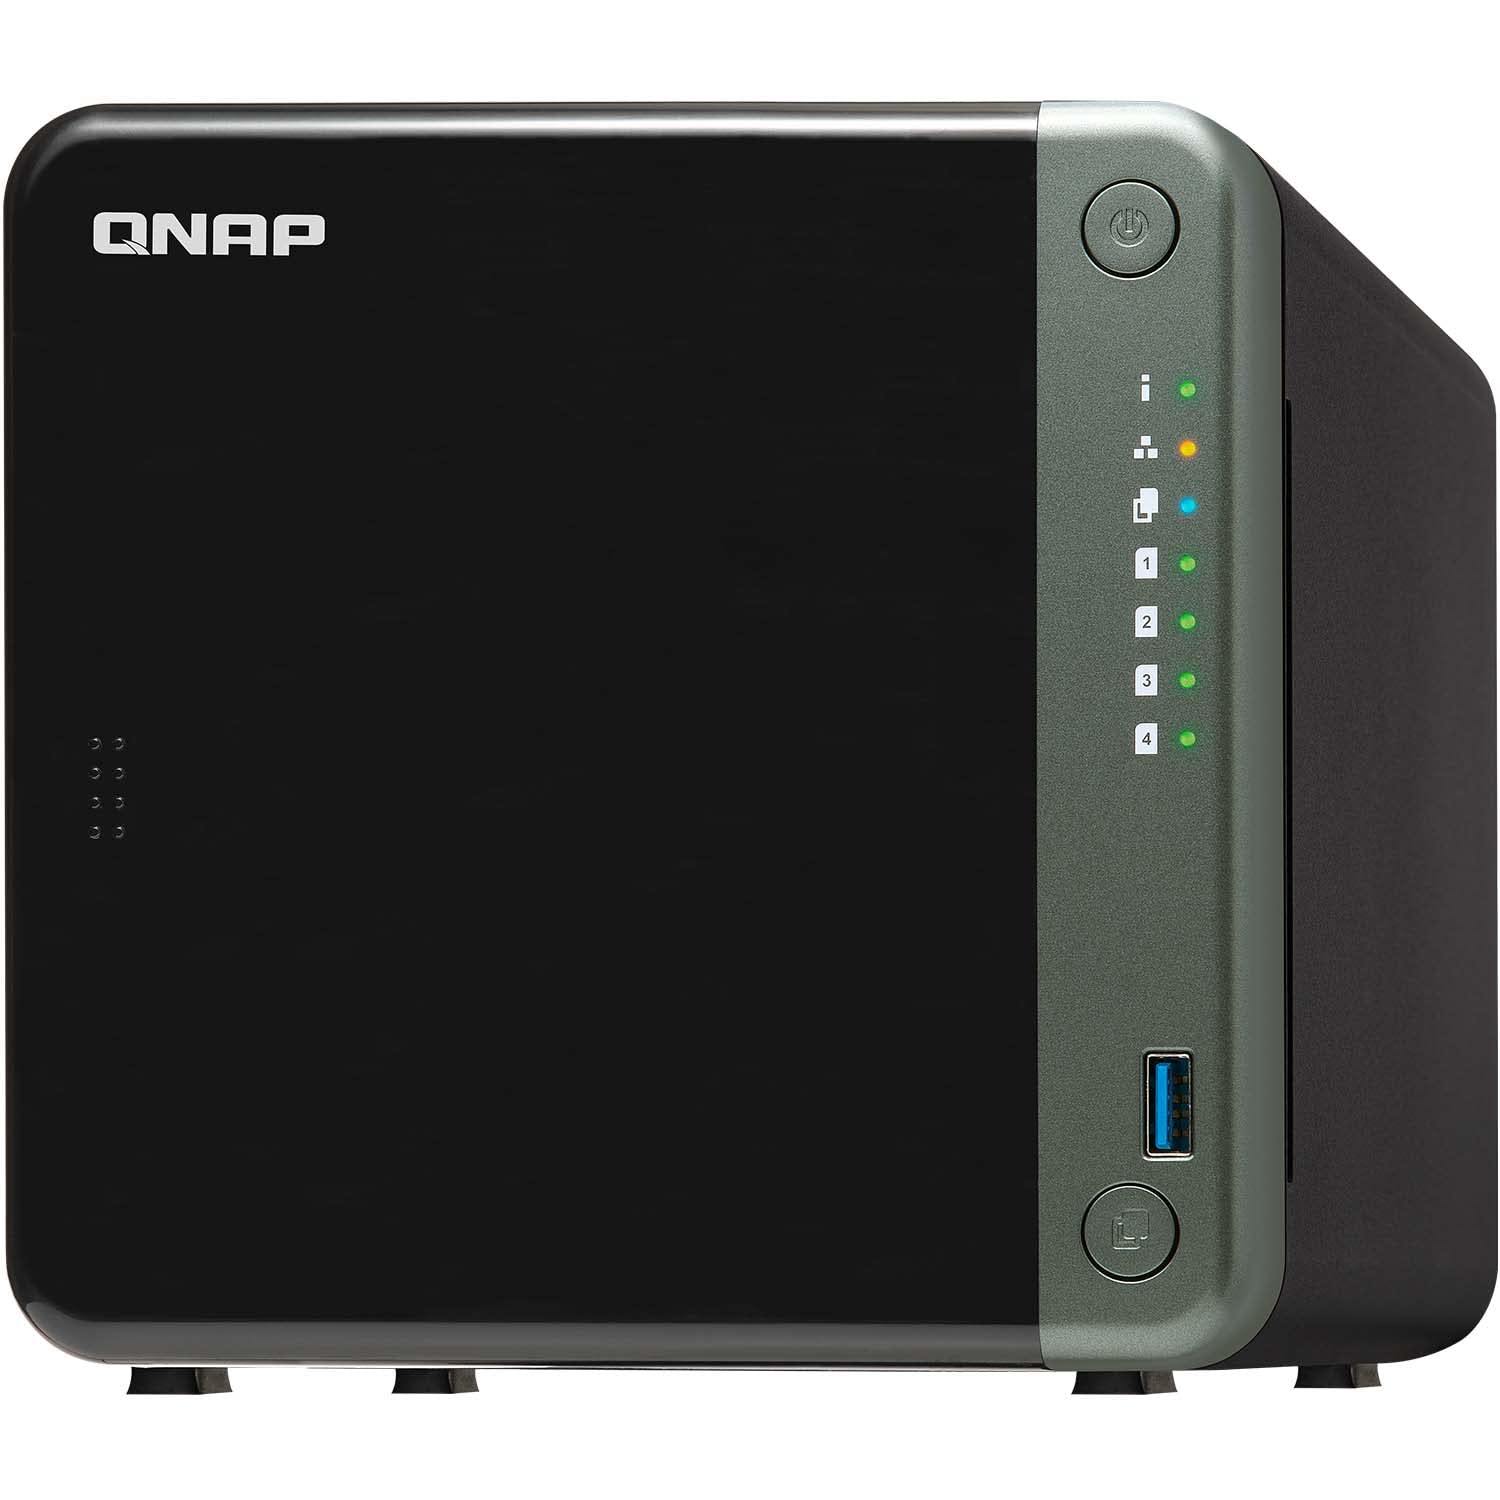 QNAP TS-453D-4G 4 Bay Desktop NAS Enclosure - With 2.5 GB E Connectivity, 4 GB RAM, Intel Celeron Quad-Core, 2.0 GHz Processor - for Professionals, Supporting PCIe Expansion